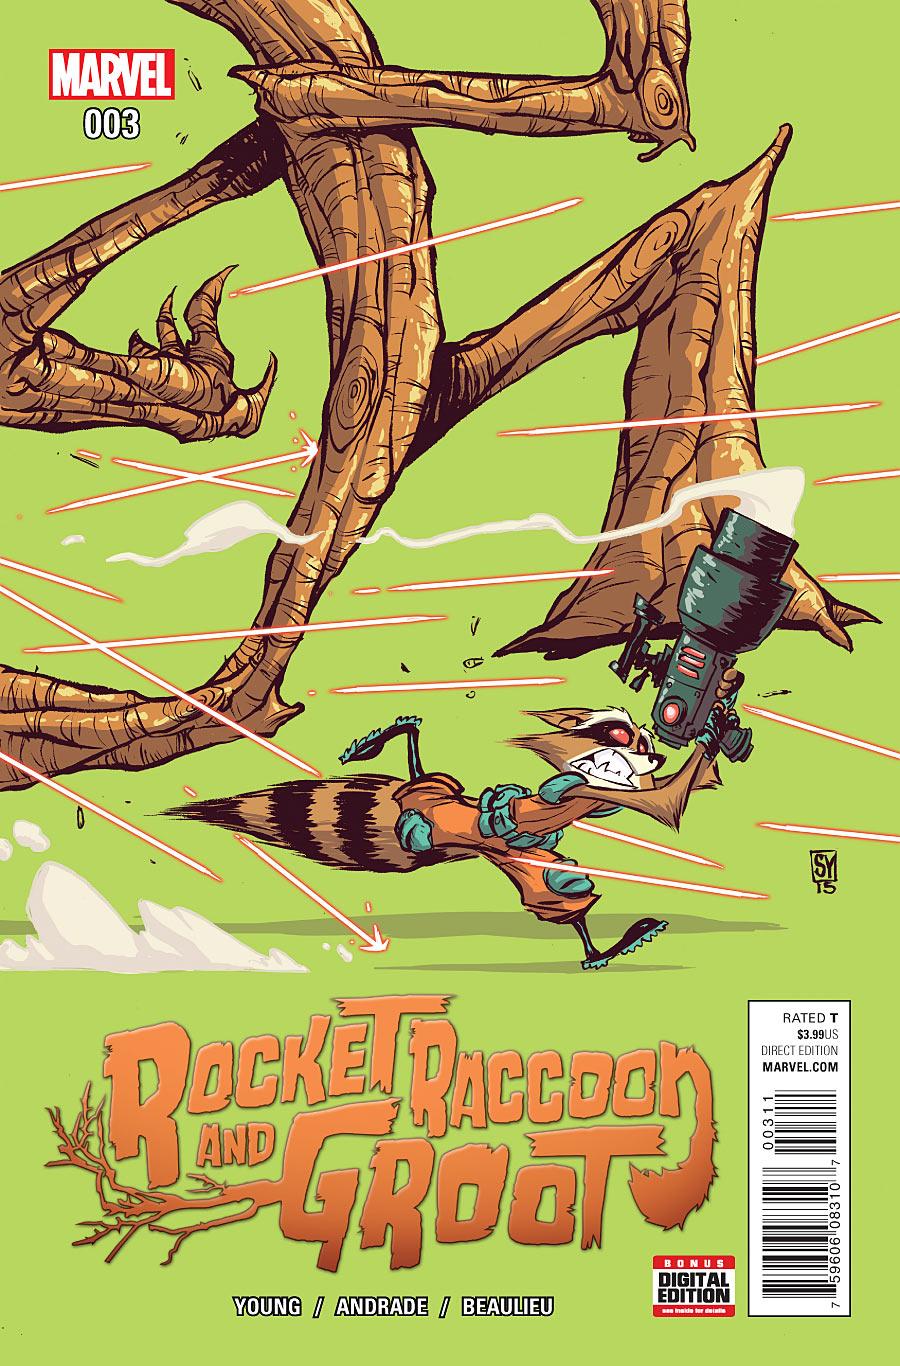 Rocket Raccoon and Groot Vol. 1 #3